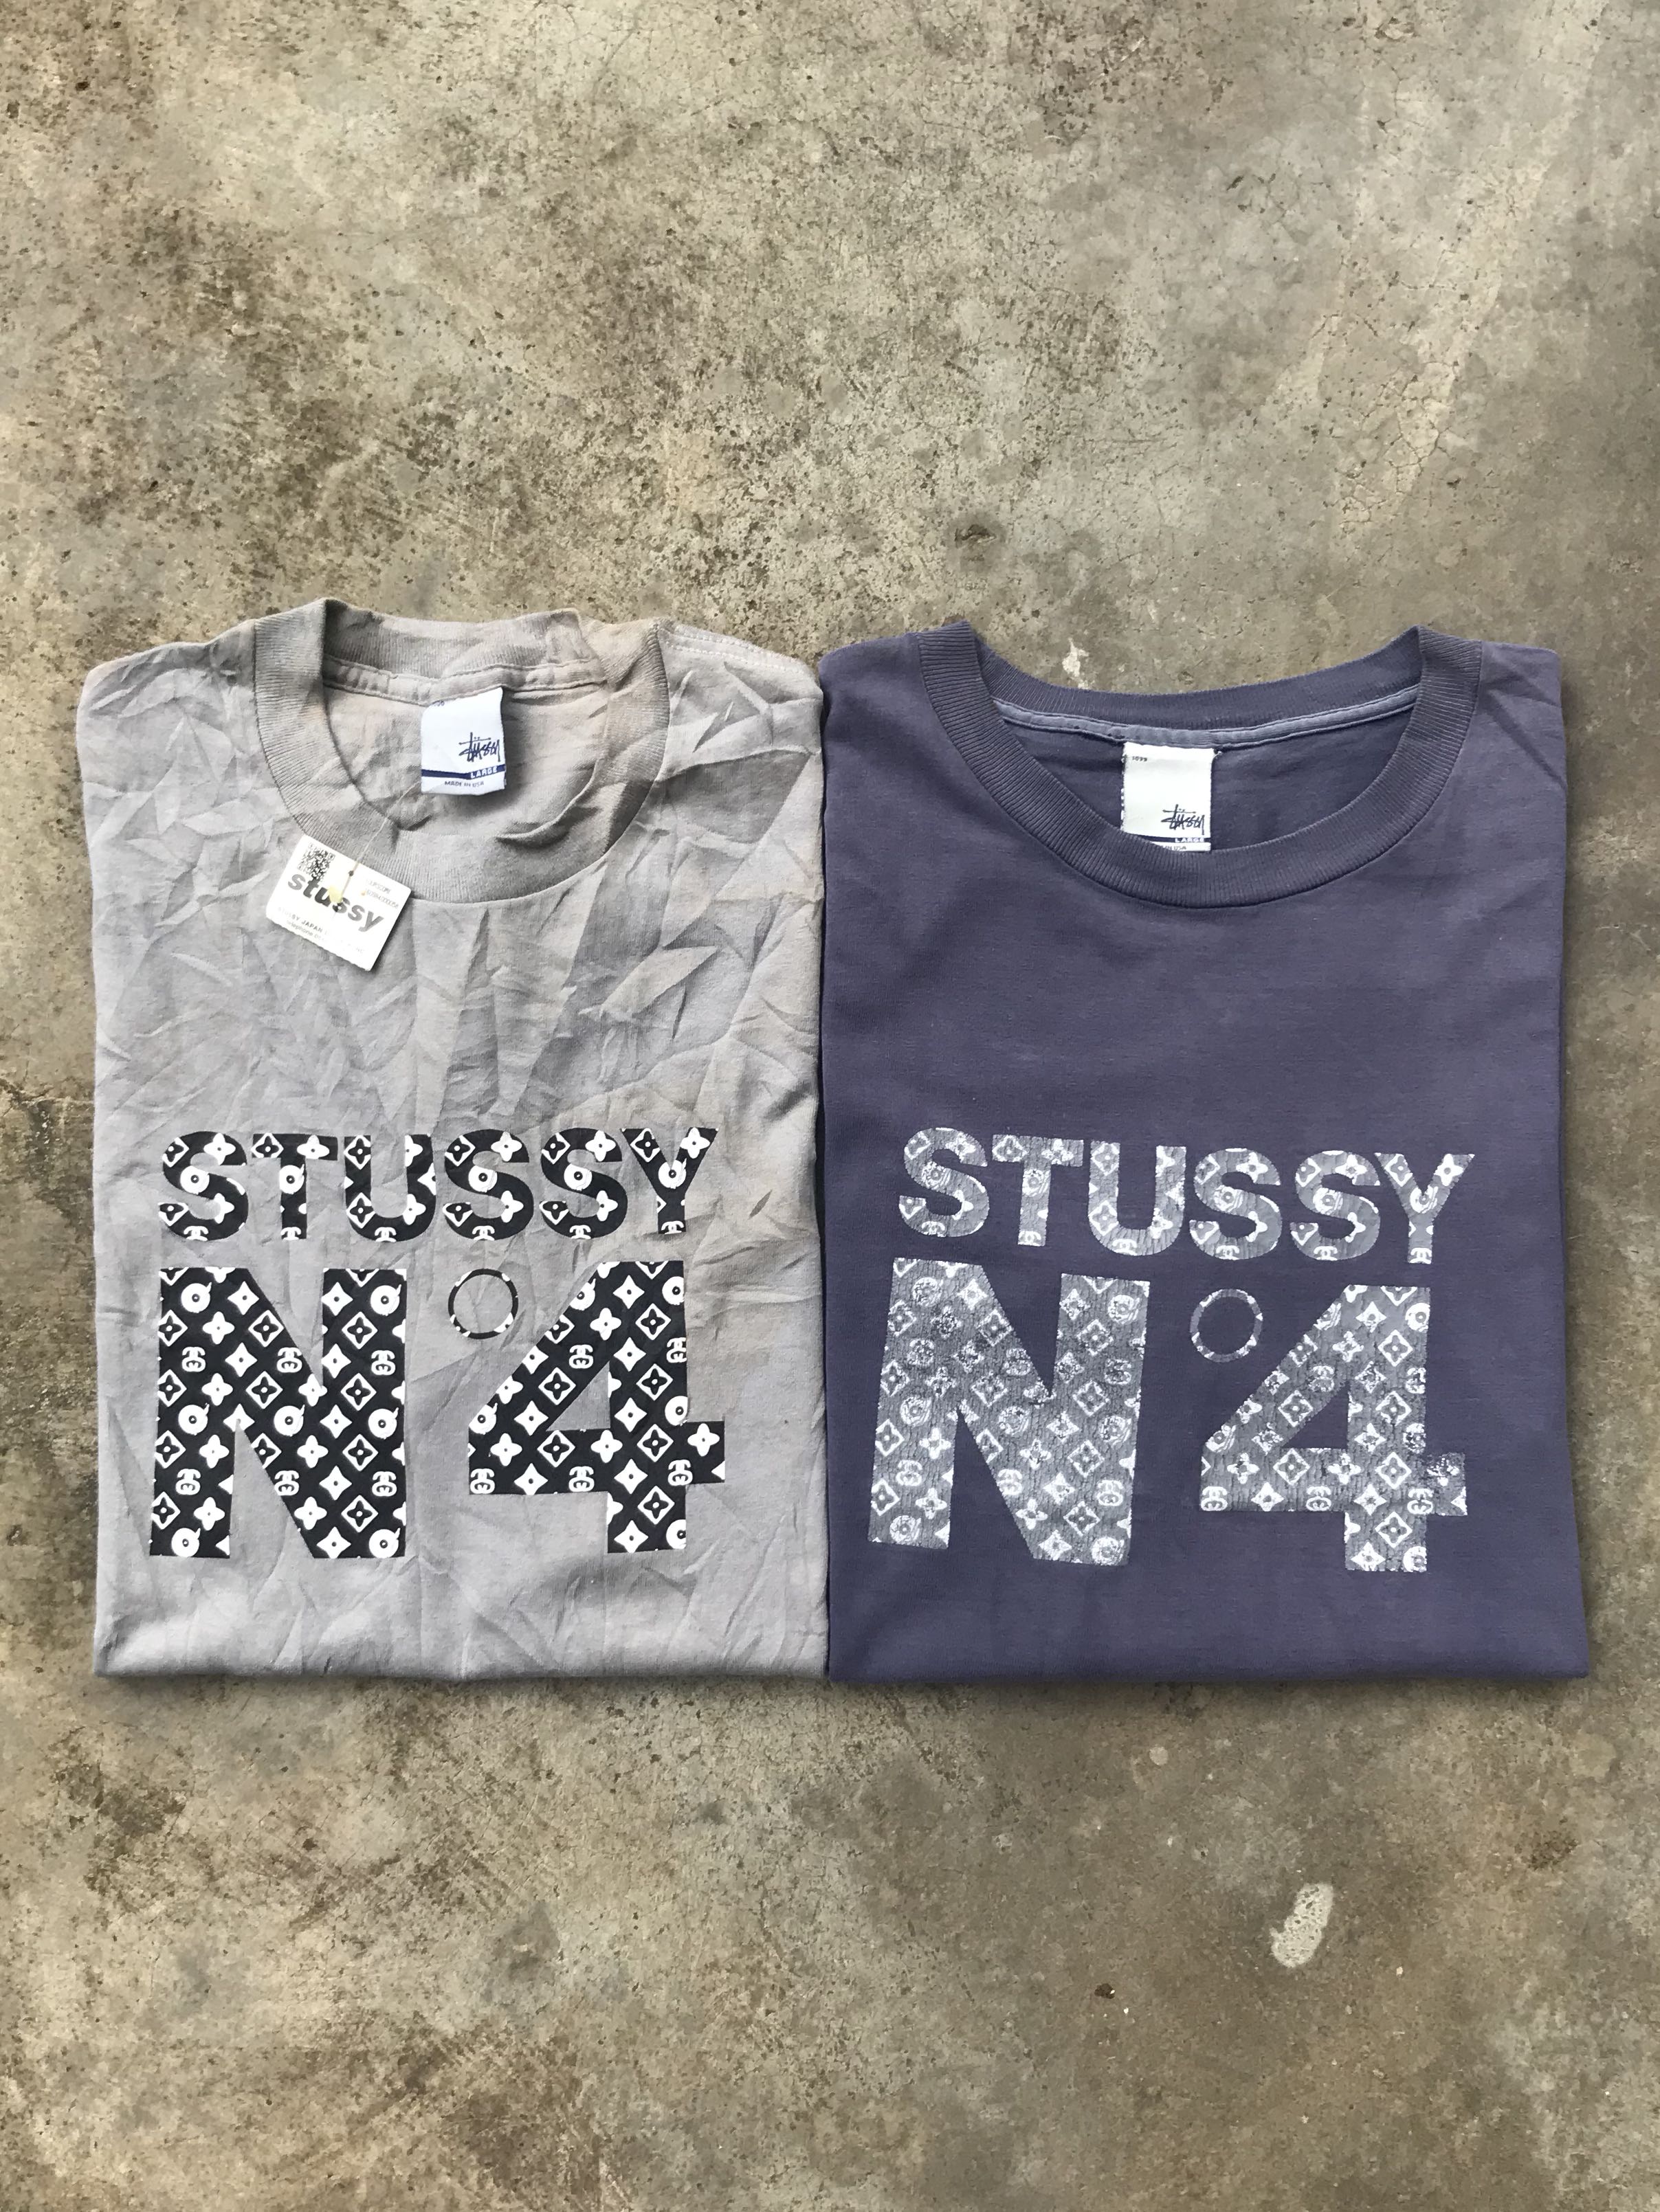 Stussy LV Monogram Tee Size L P21 L29 Rm❌SOLD❌